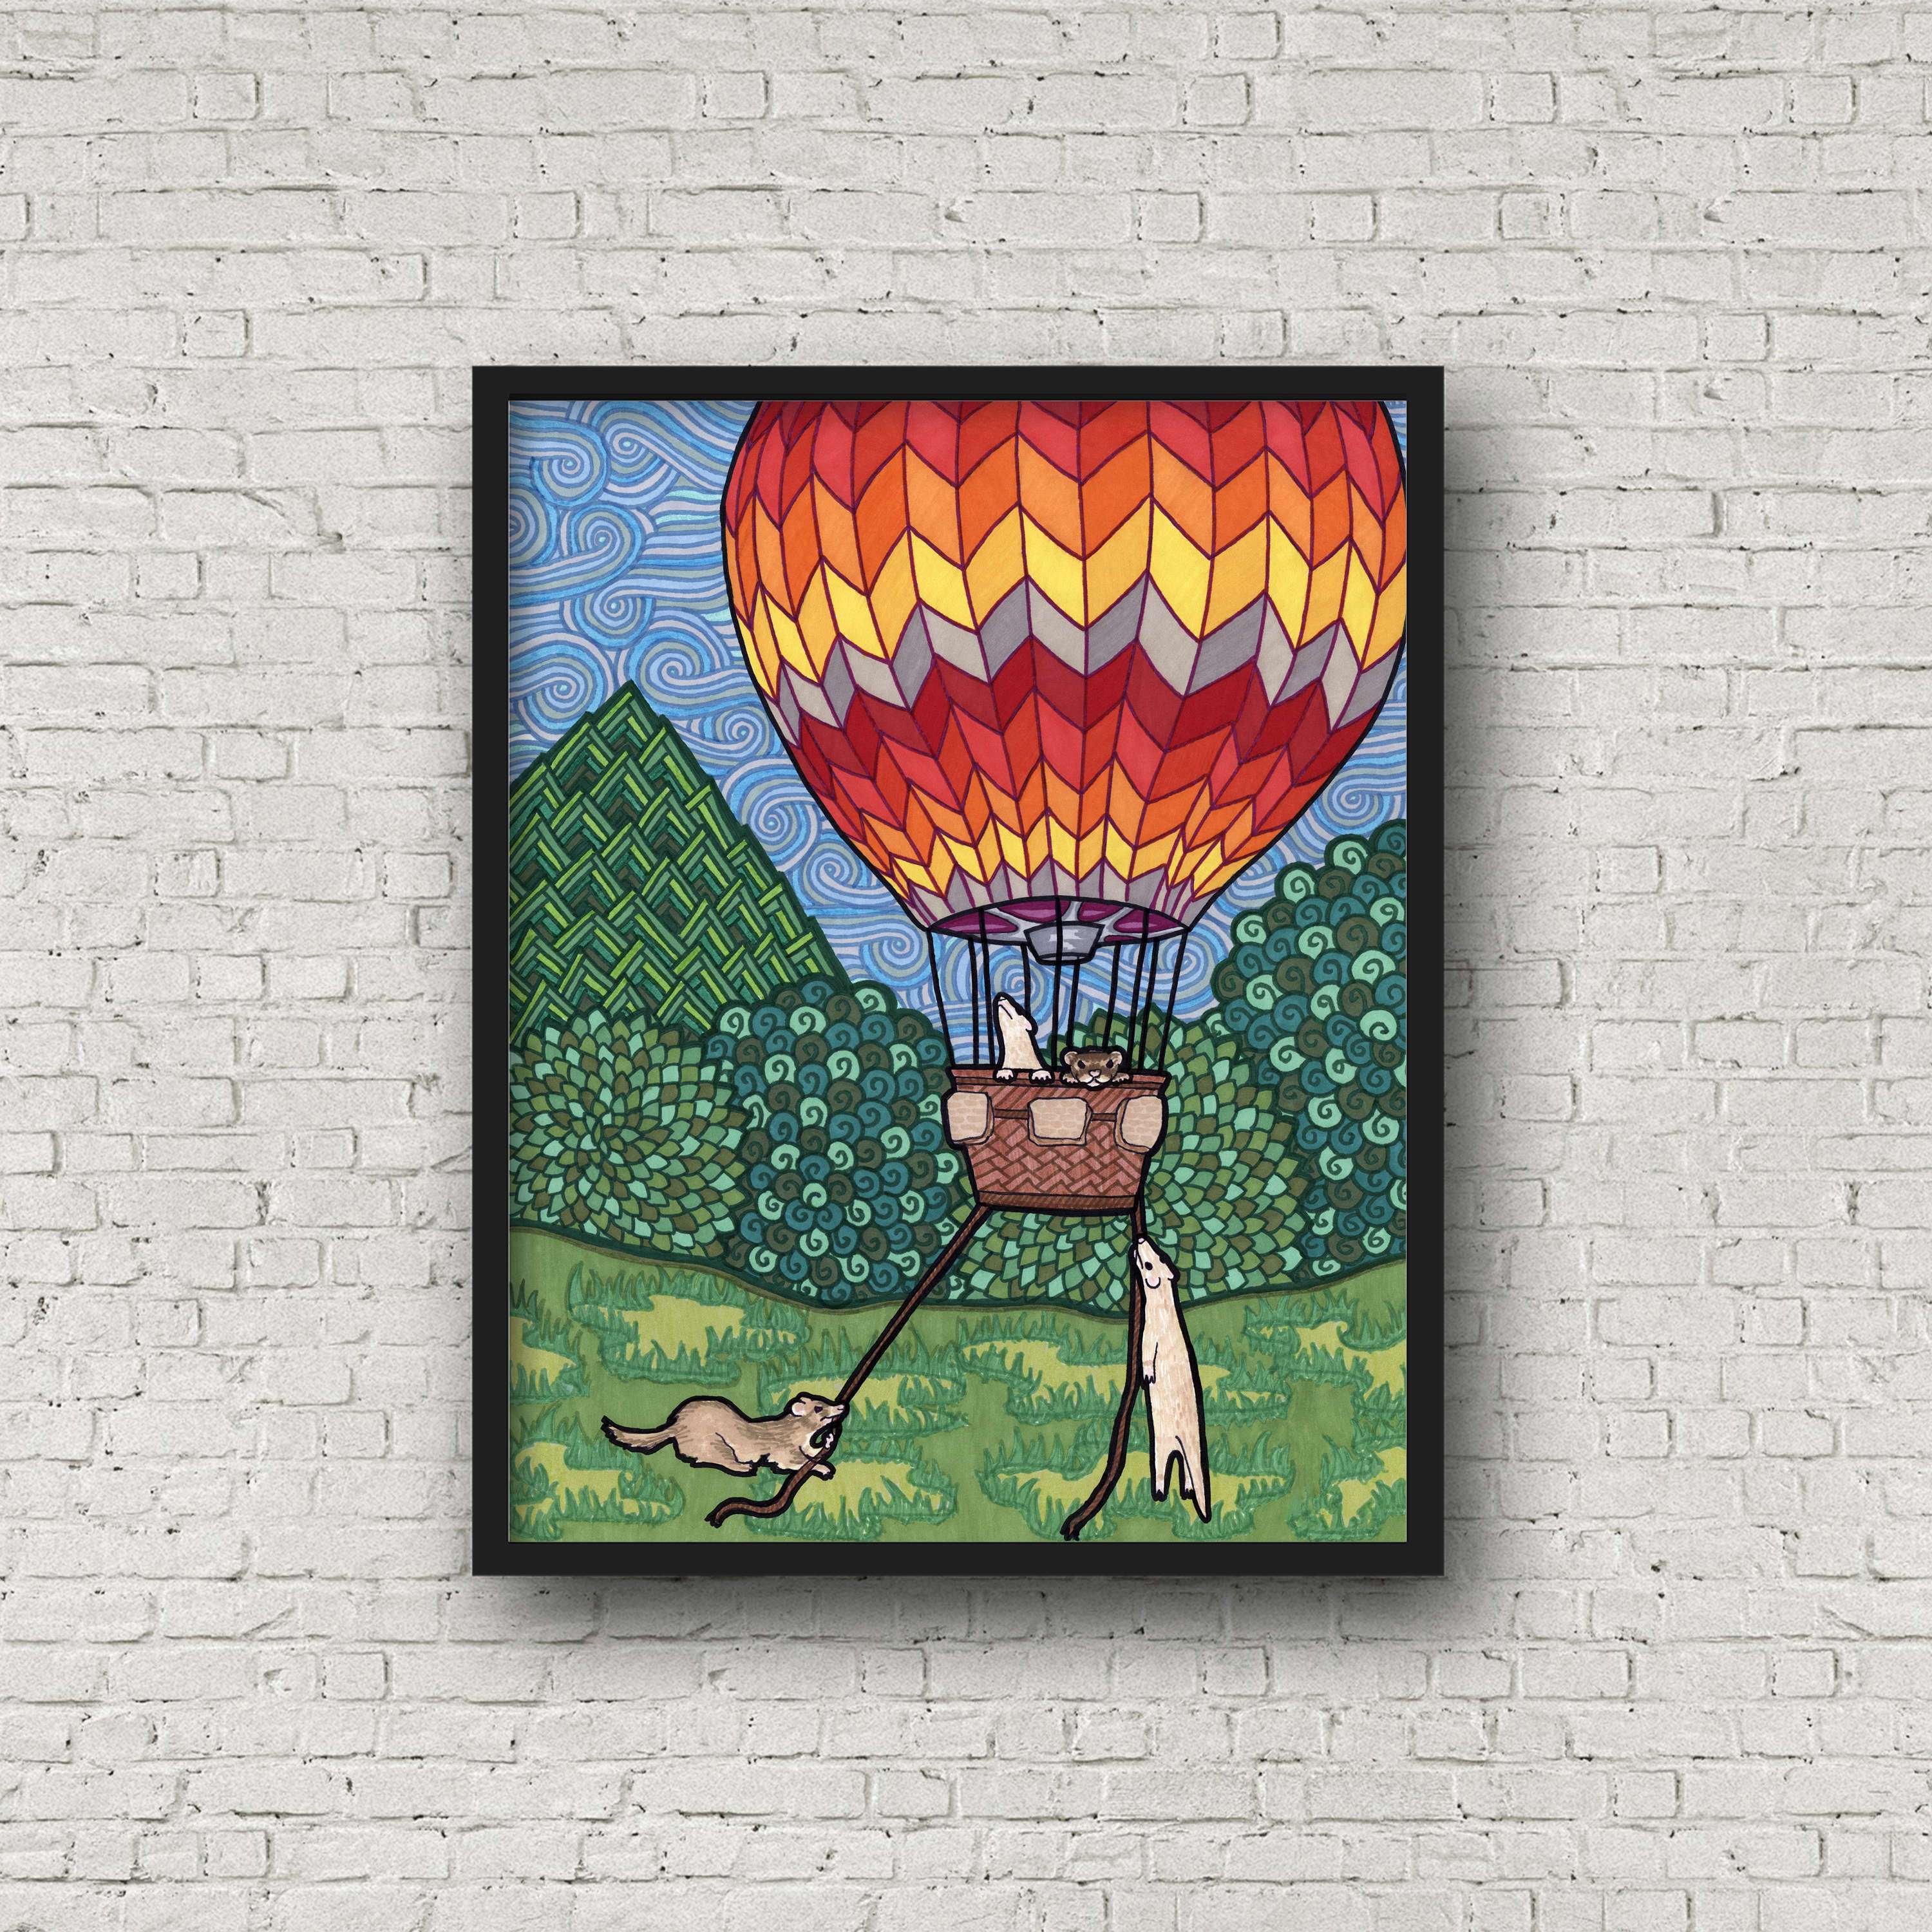 Playful ferret art print of a hot air balloon ferret artwork displayed on a brick wall.